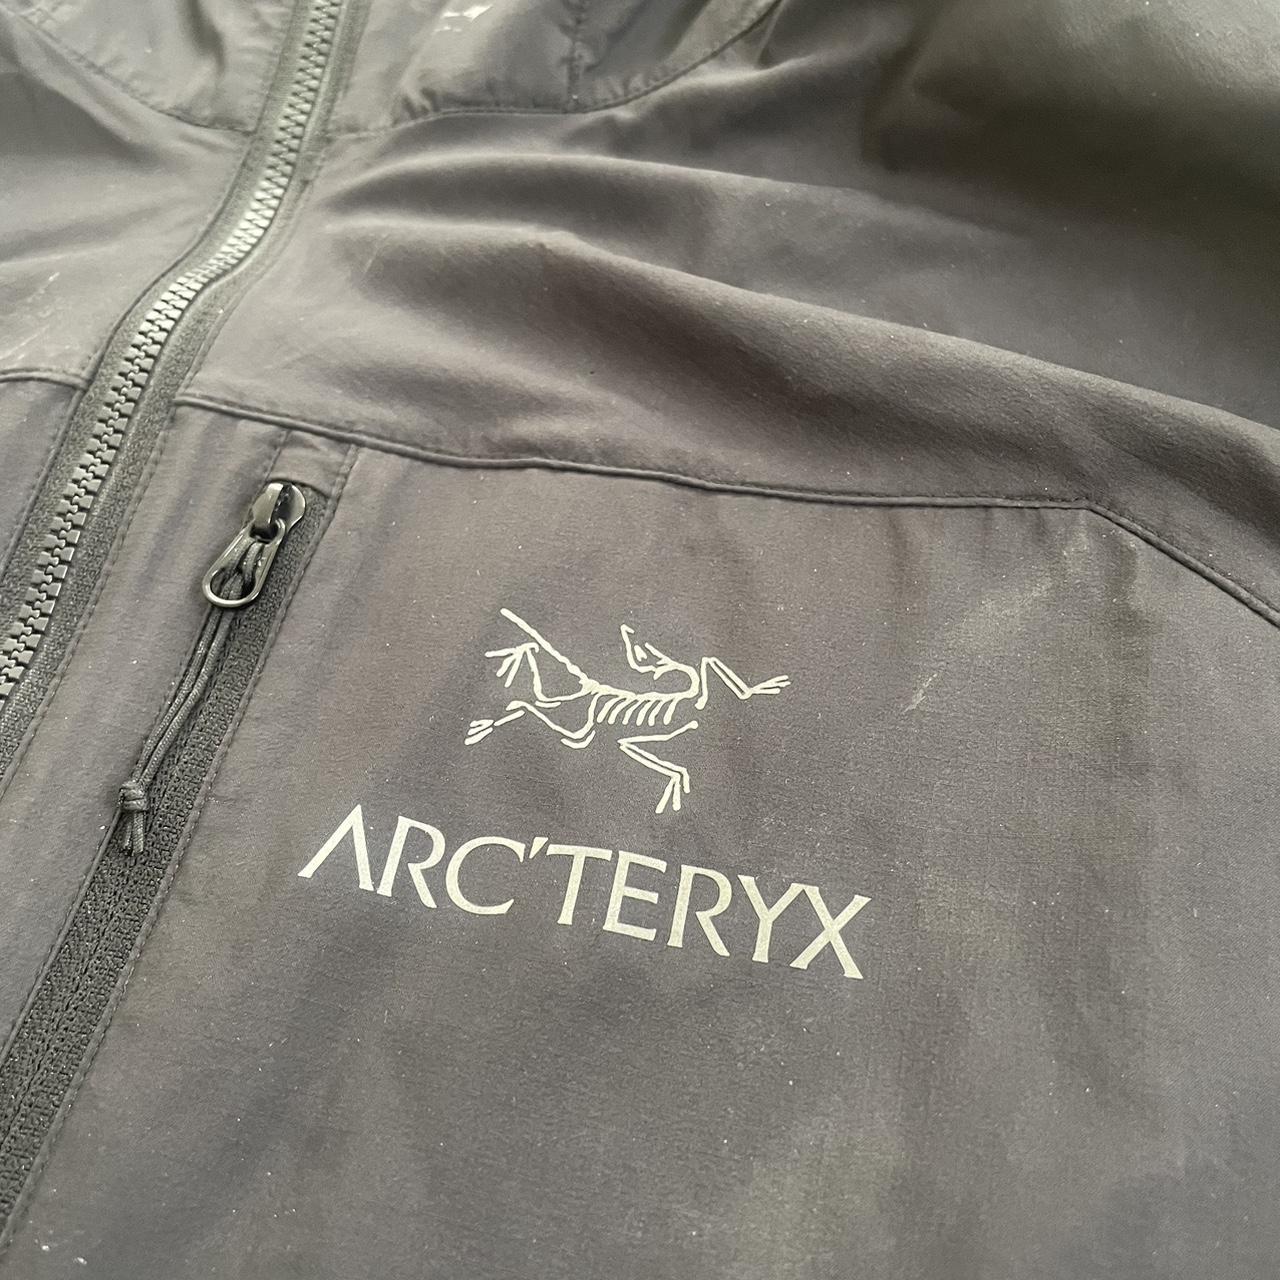 Arc'teryx Men's Black and White Jacket | Depop